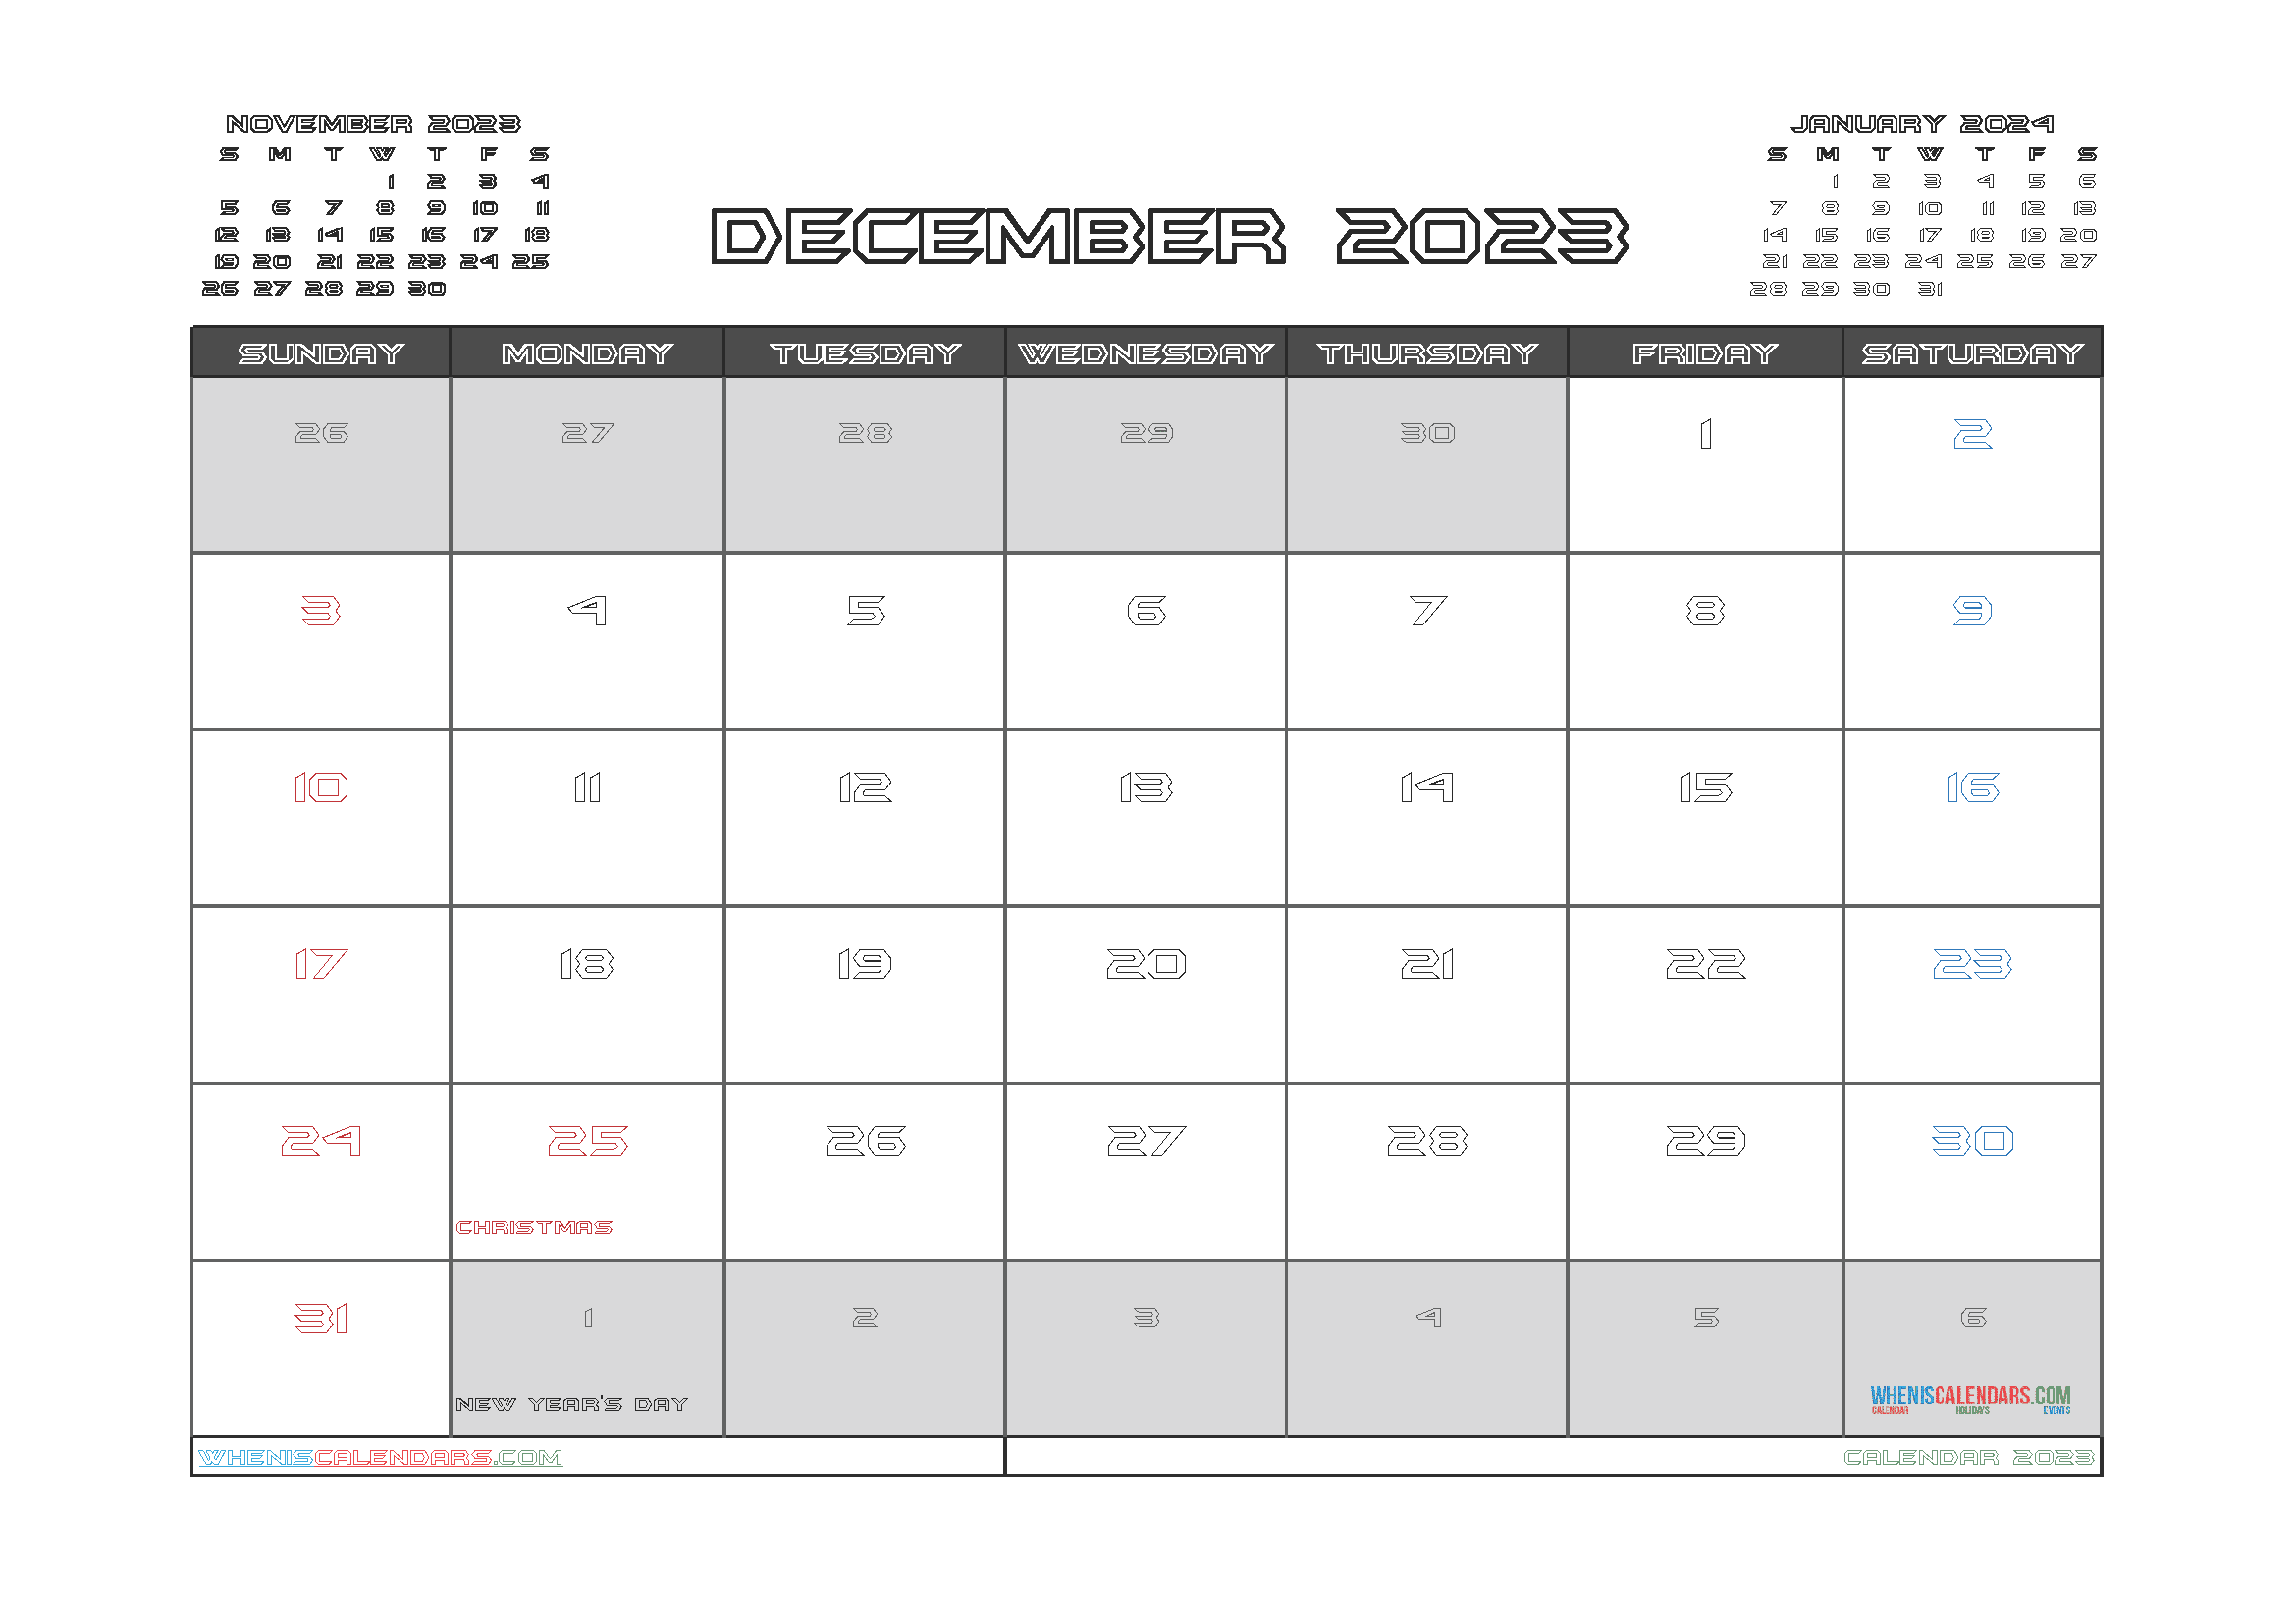 Free December 2023 Calendar with Holidays Printable PDF in Landscape